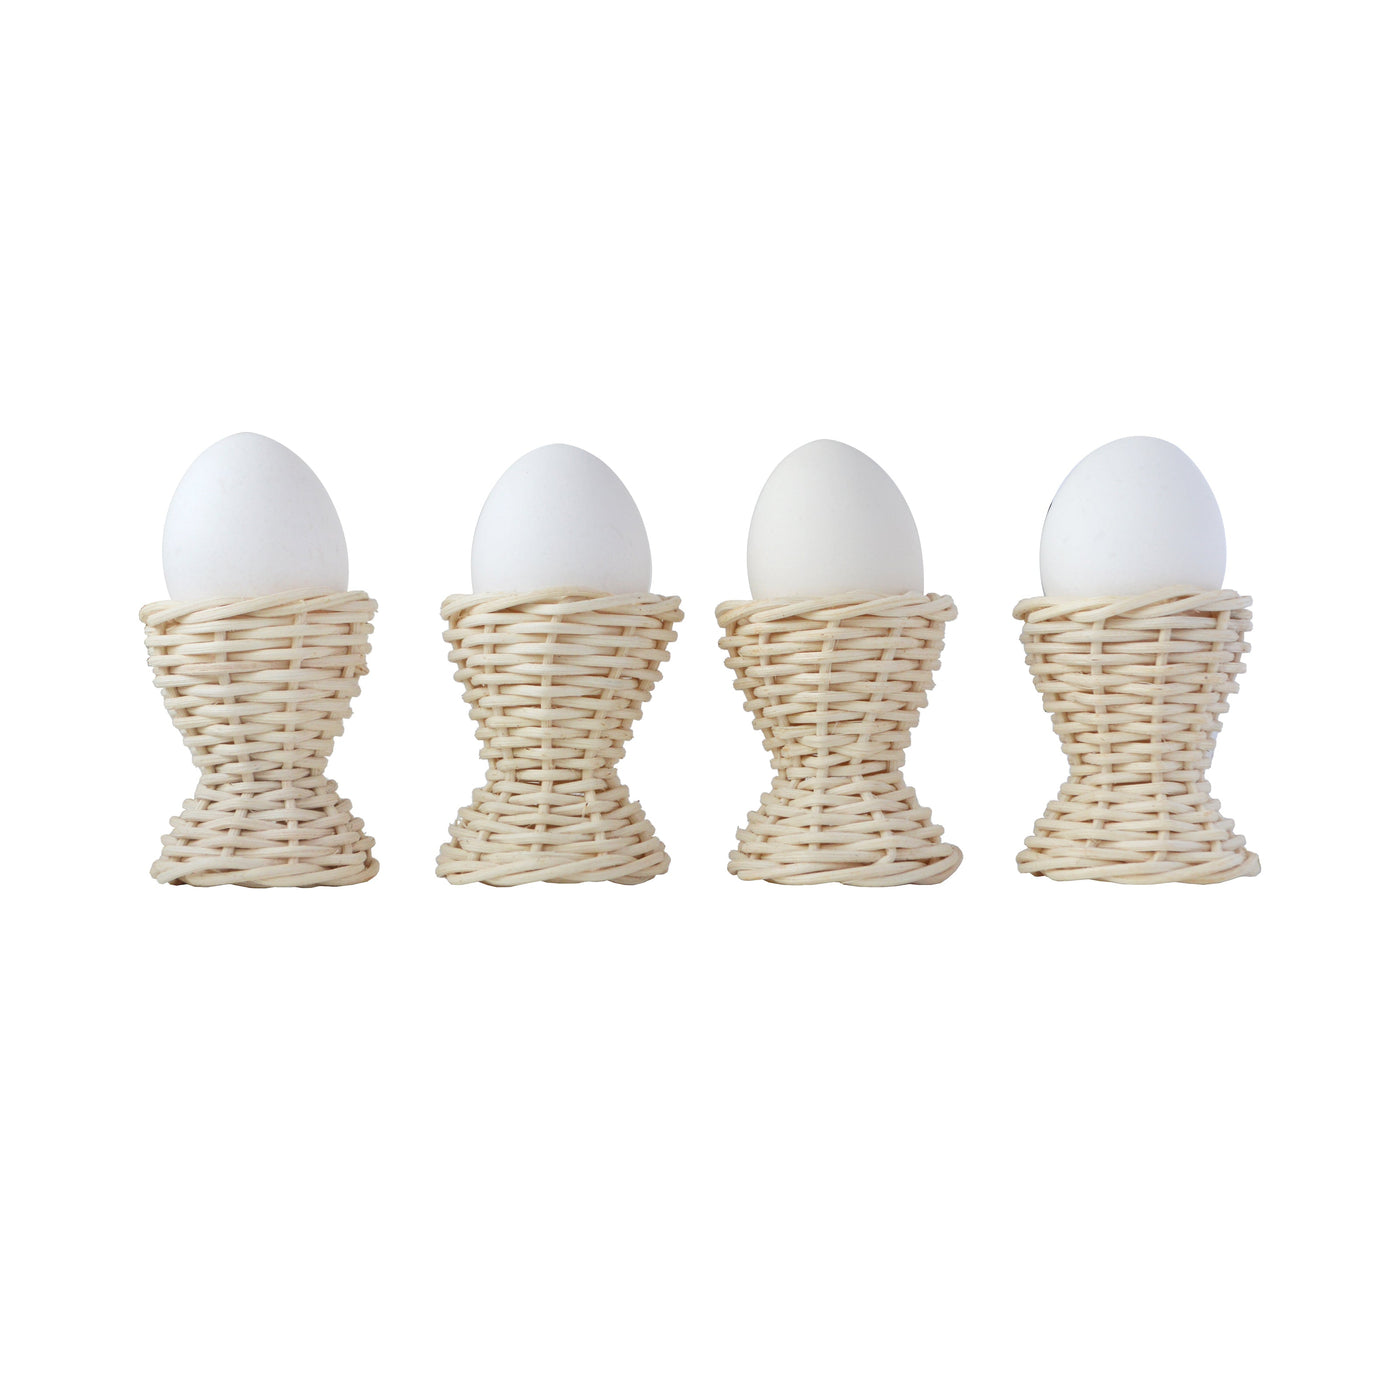 Egg Holders (4) garland Chefanie 